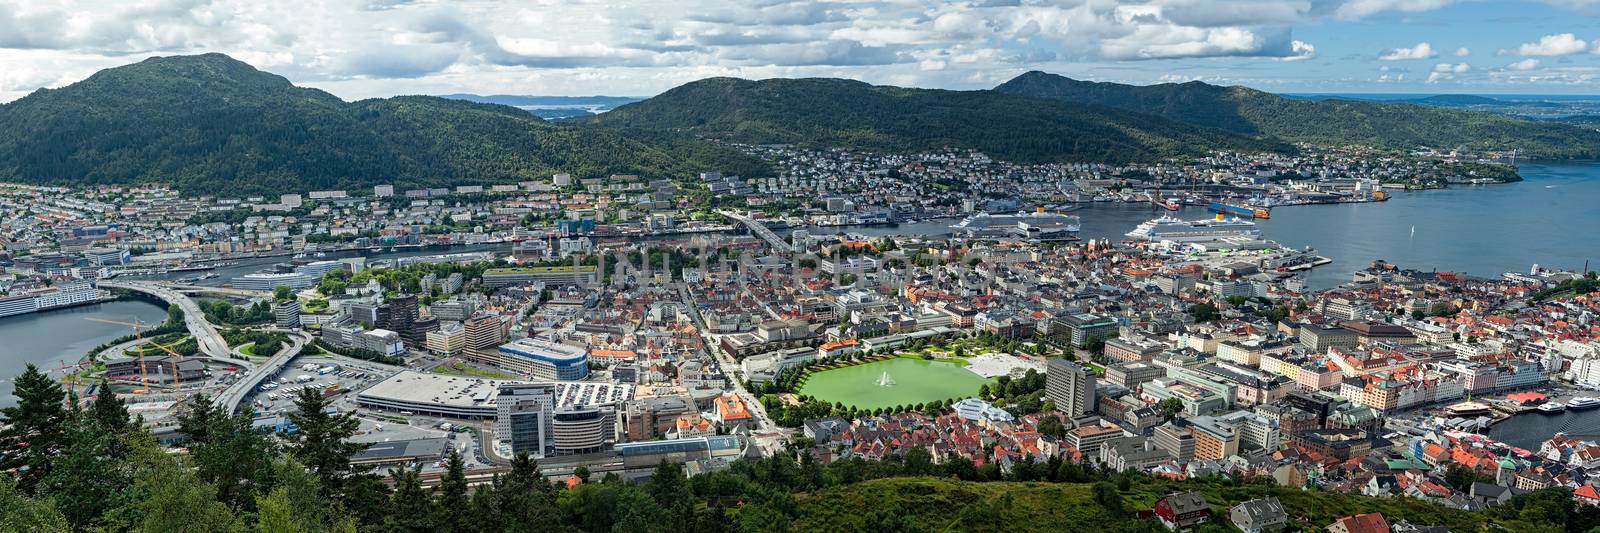 Panoramic view of Bergen, Norway by LuigiMorbidelli